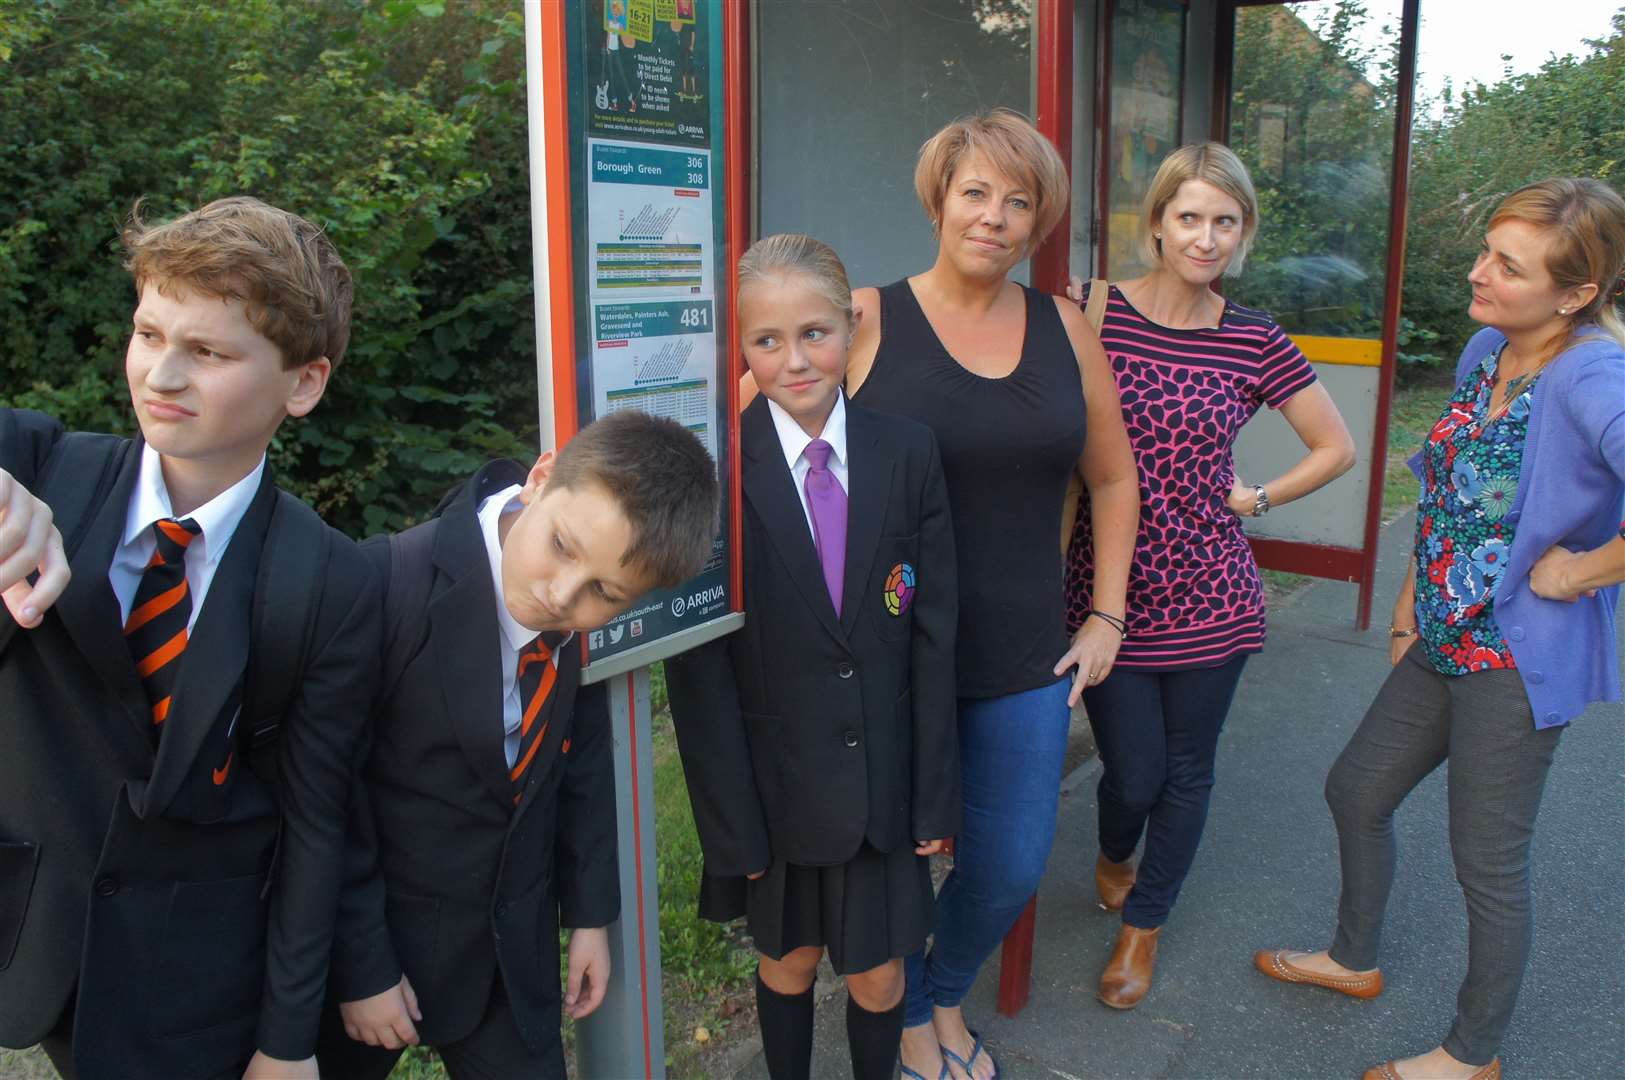 (L/R) Dennis Hughes, 11, Christian Timothy, 11, Ellise Ayres, 11, Lisa Ayres, Estelle Timothy, Joanna Hughes waiting at the bus stop